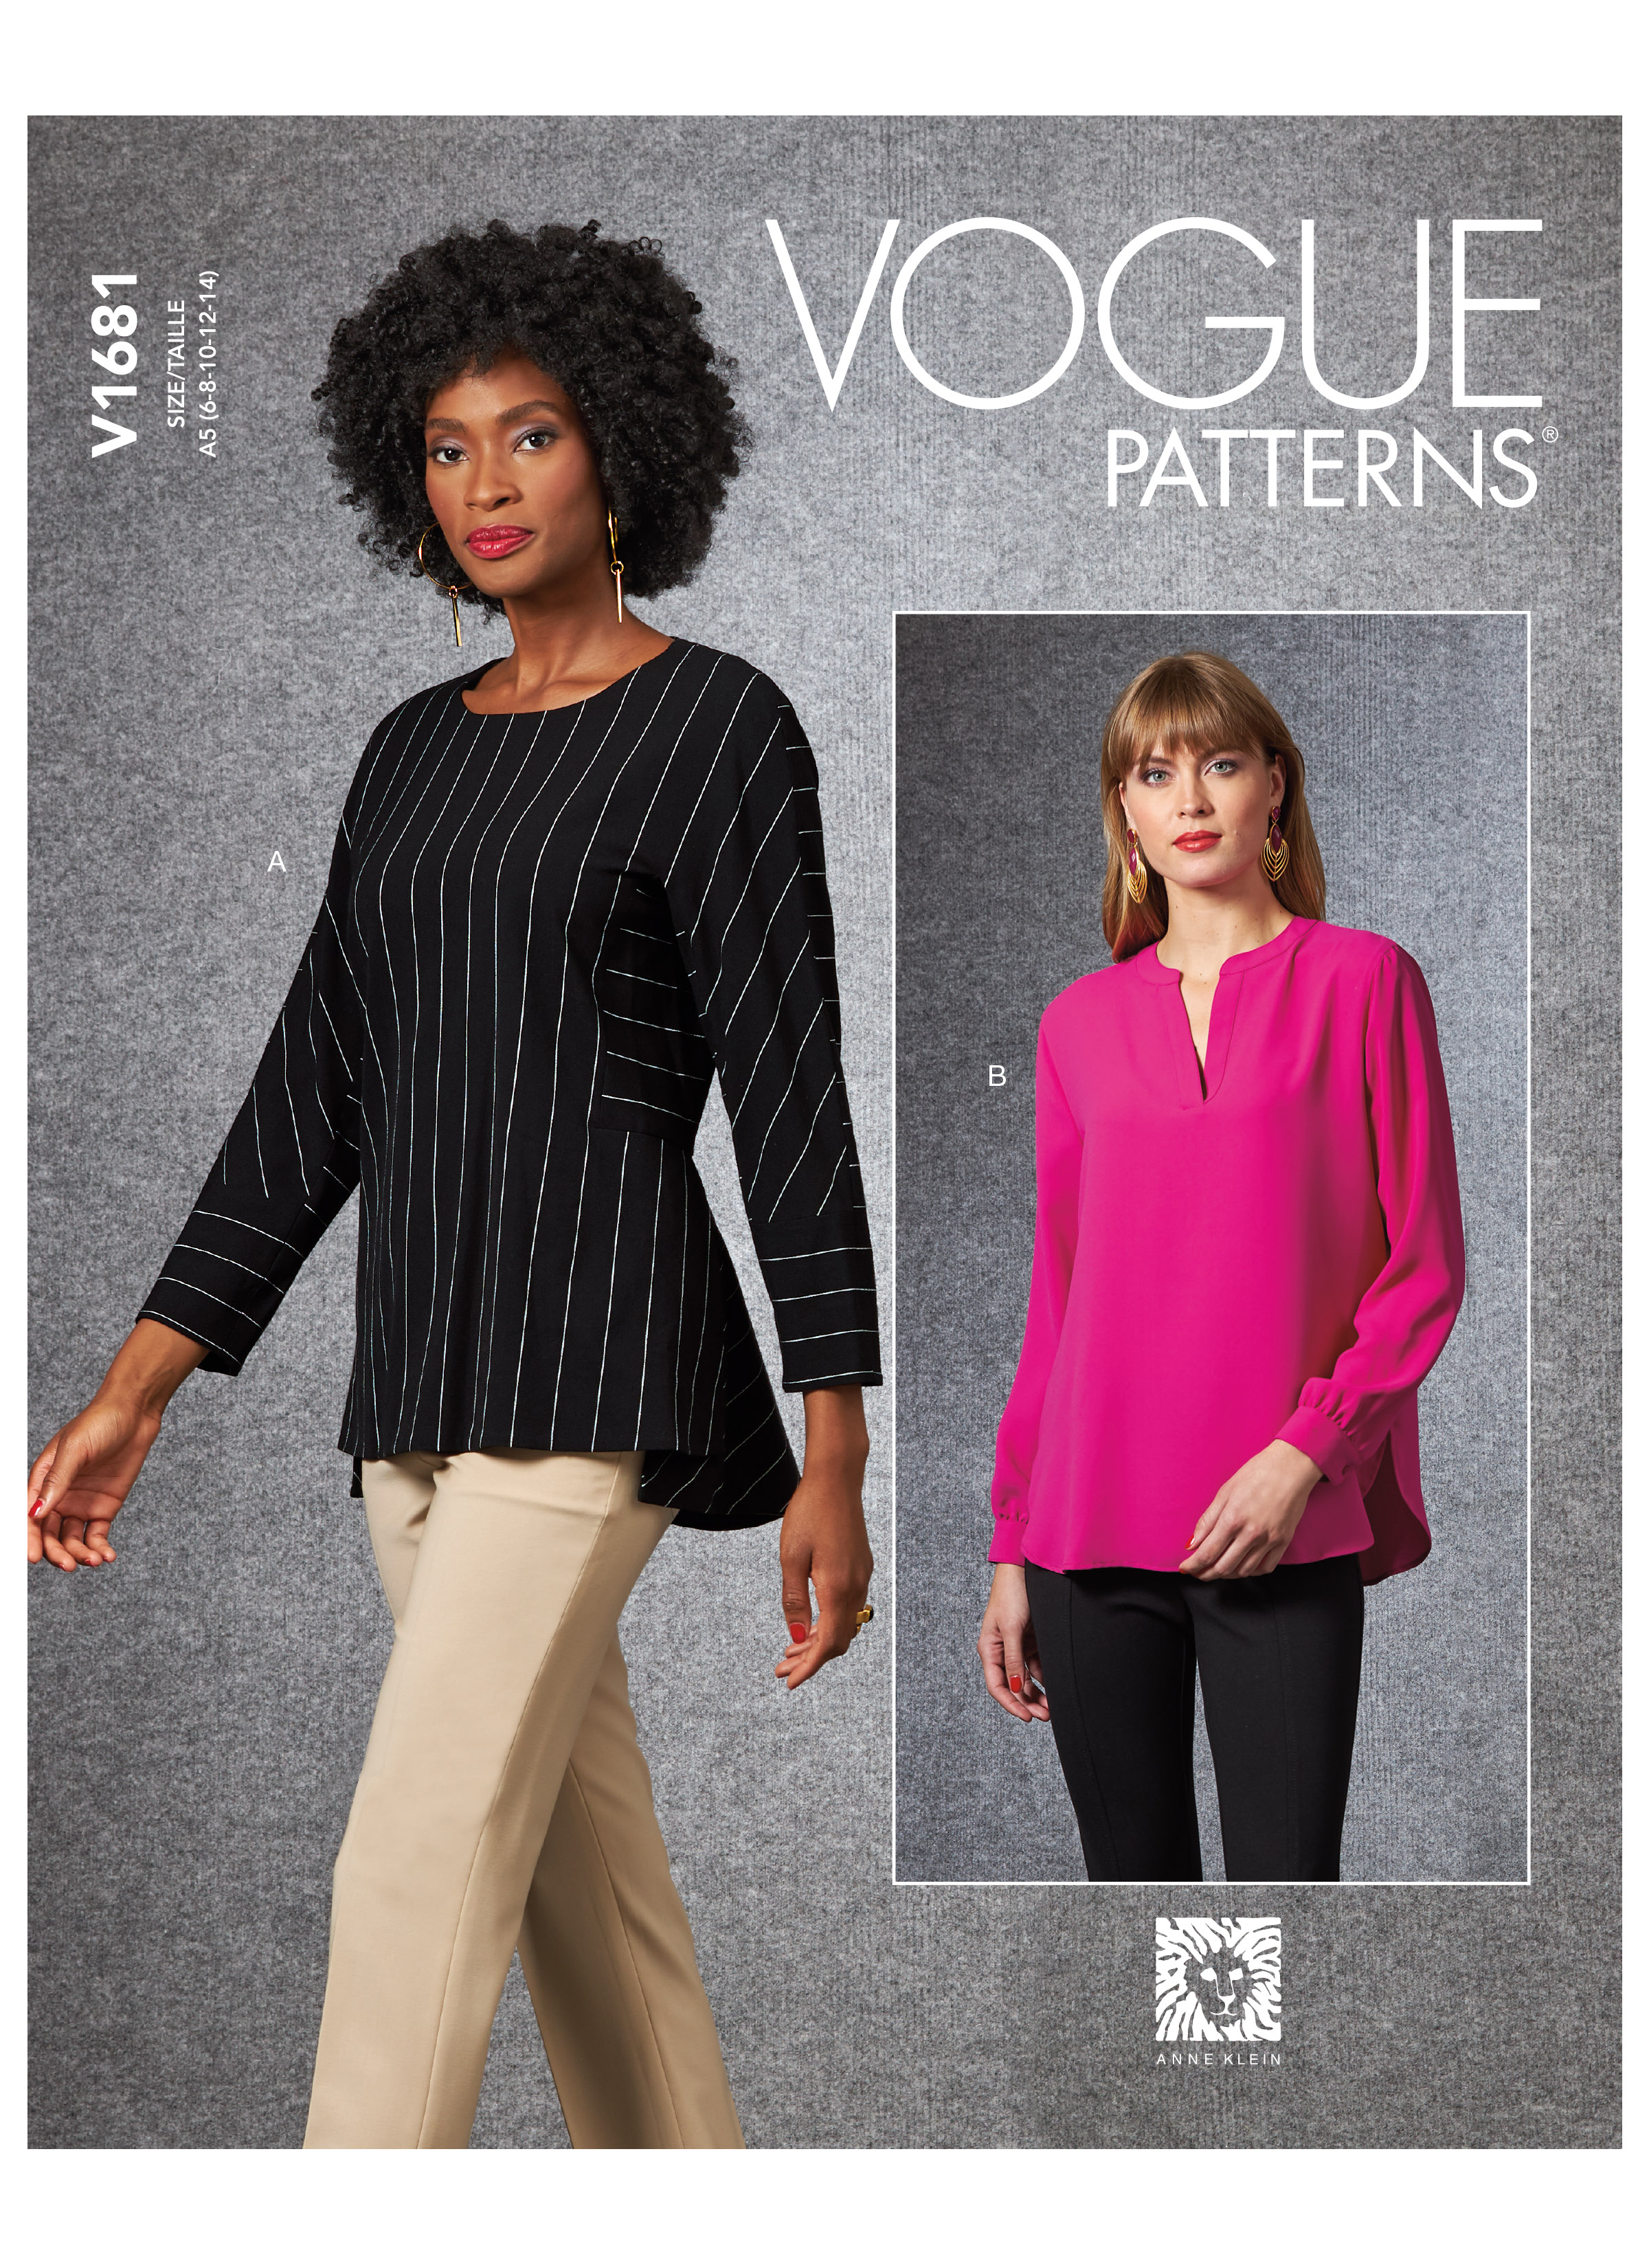 New Vogue Patterns - Spring 2020 2/4/20 - PatternReview.com Blog